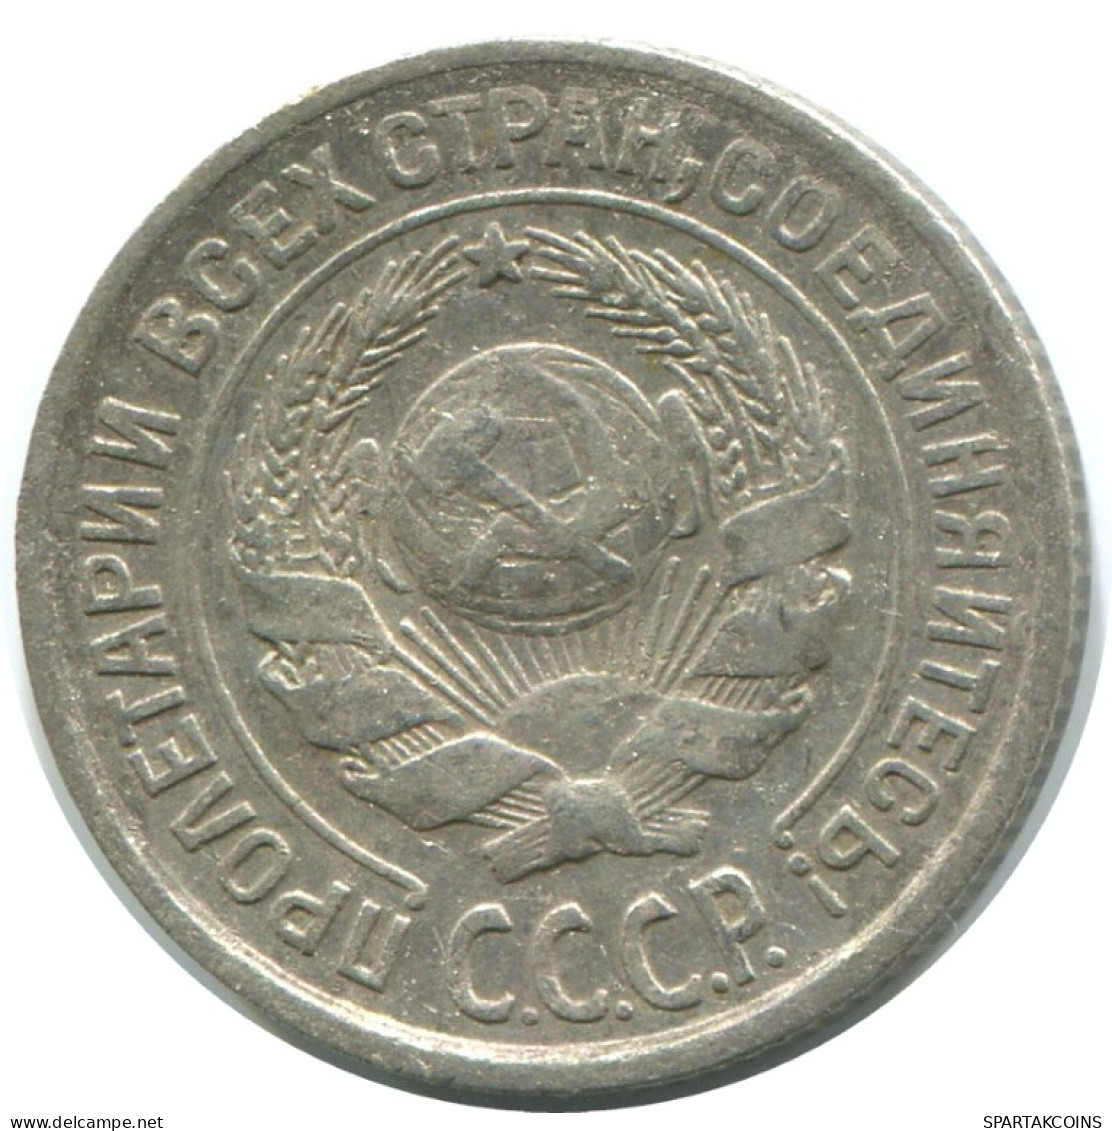 10 KOPEKS 1925 RUSIA RUSSIA USSR PLATA Moneda HIGH GRADE #AF019.4.E.A - Russia